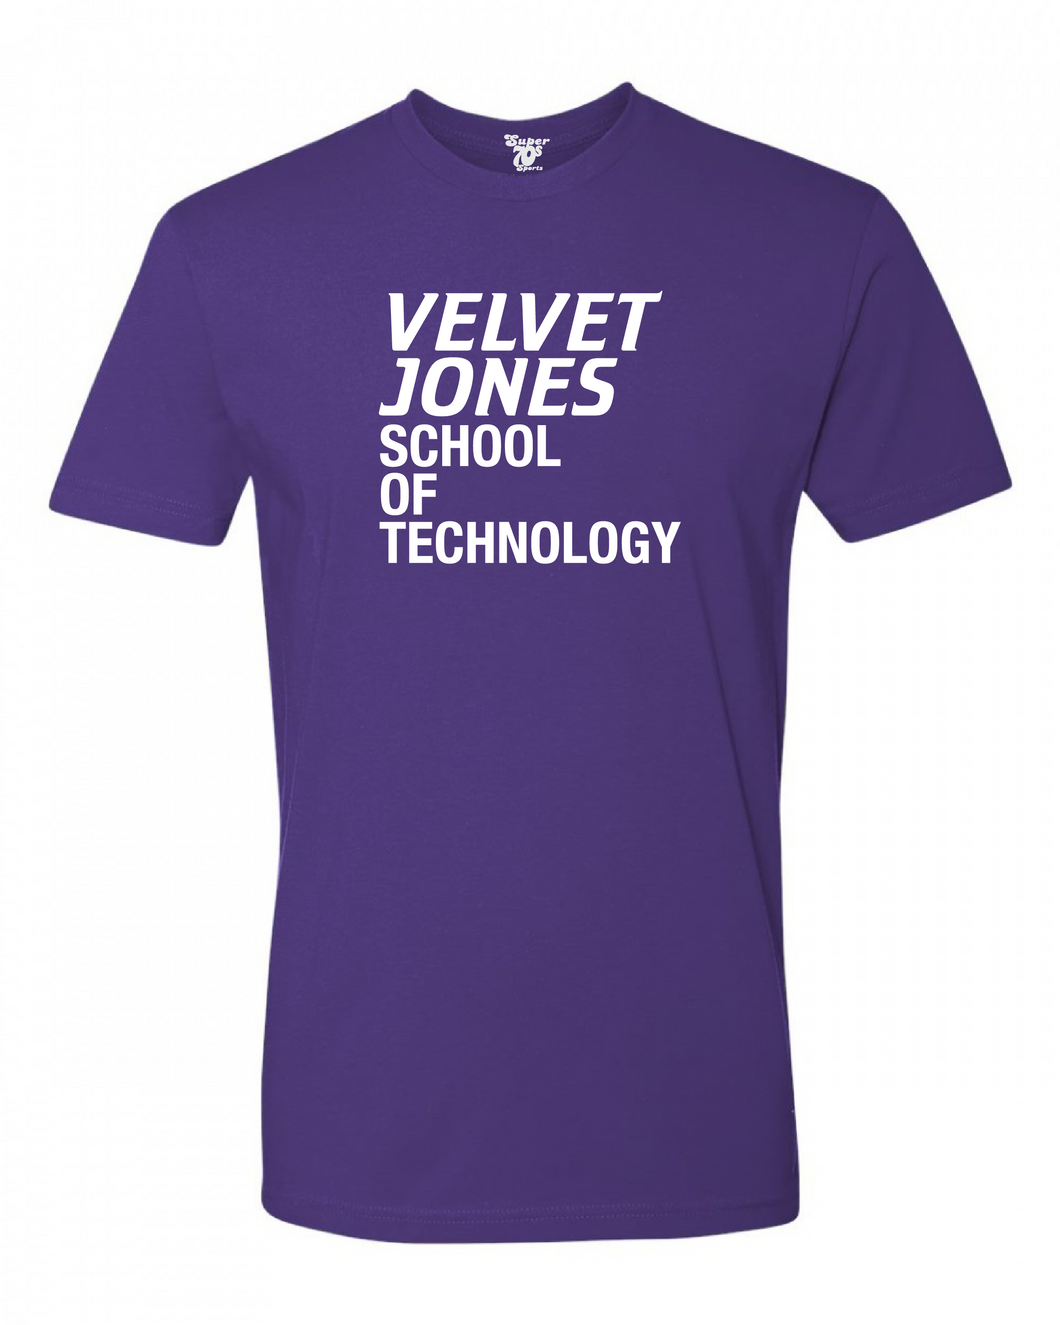 Velvet Jones School of Technology Tee